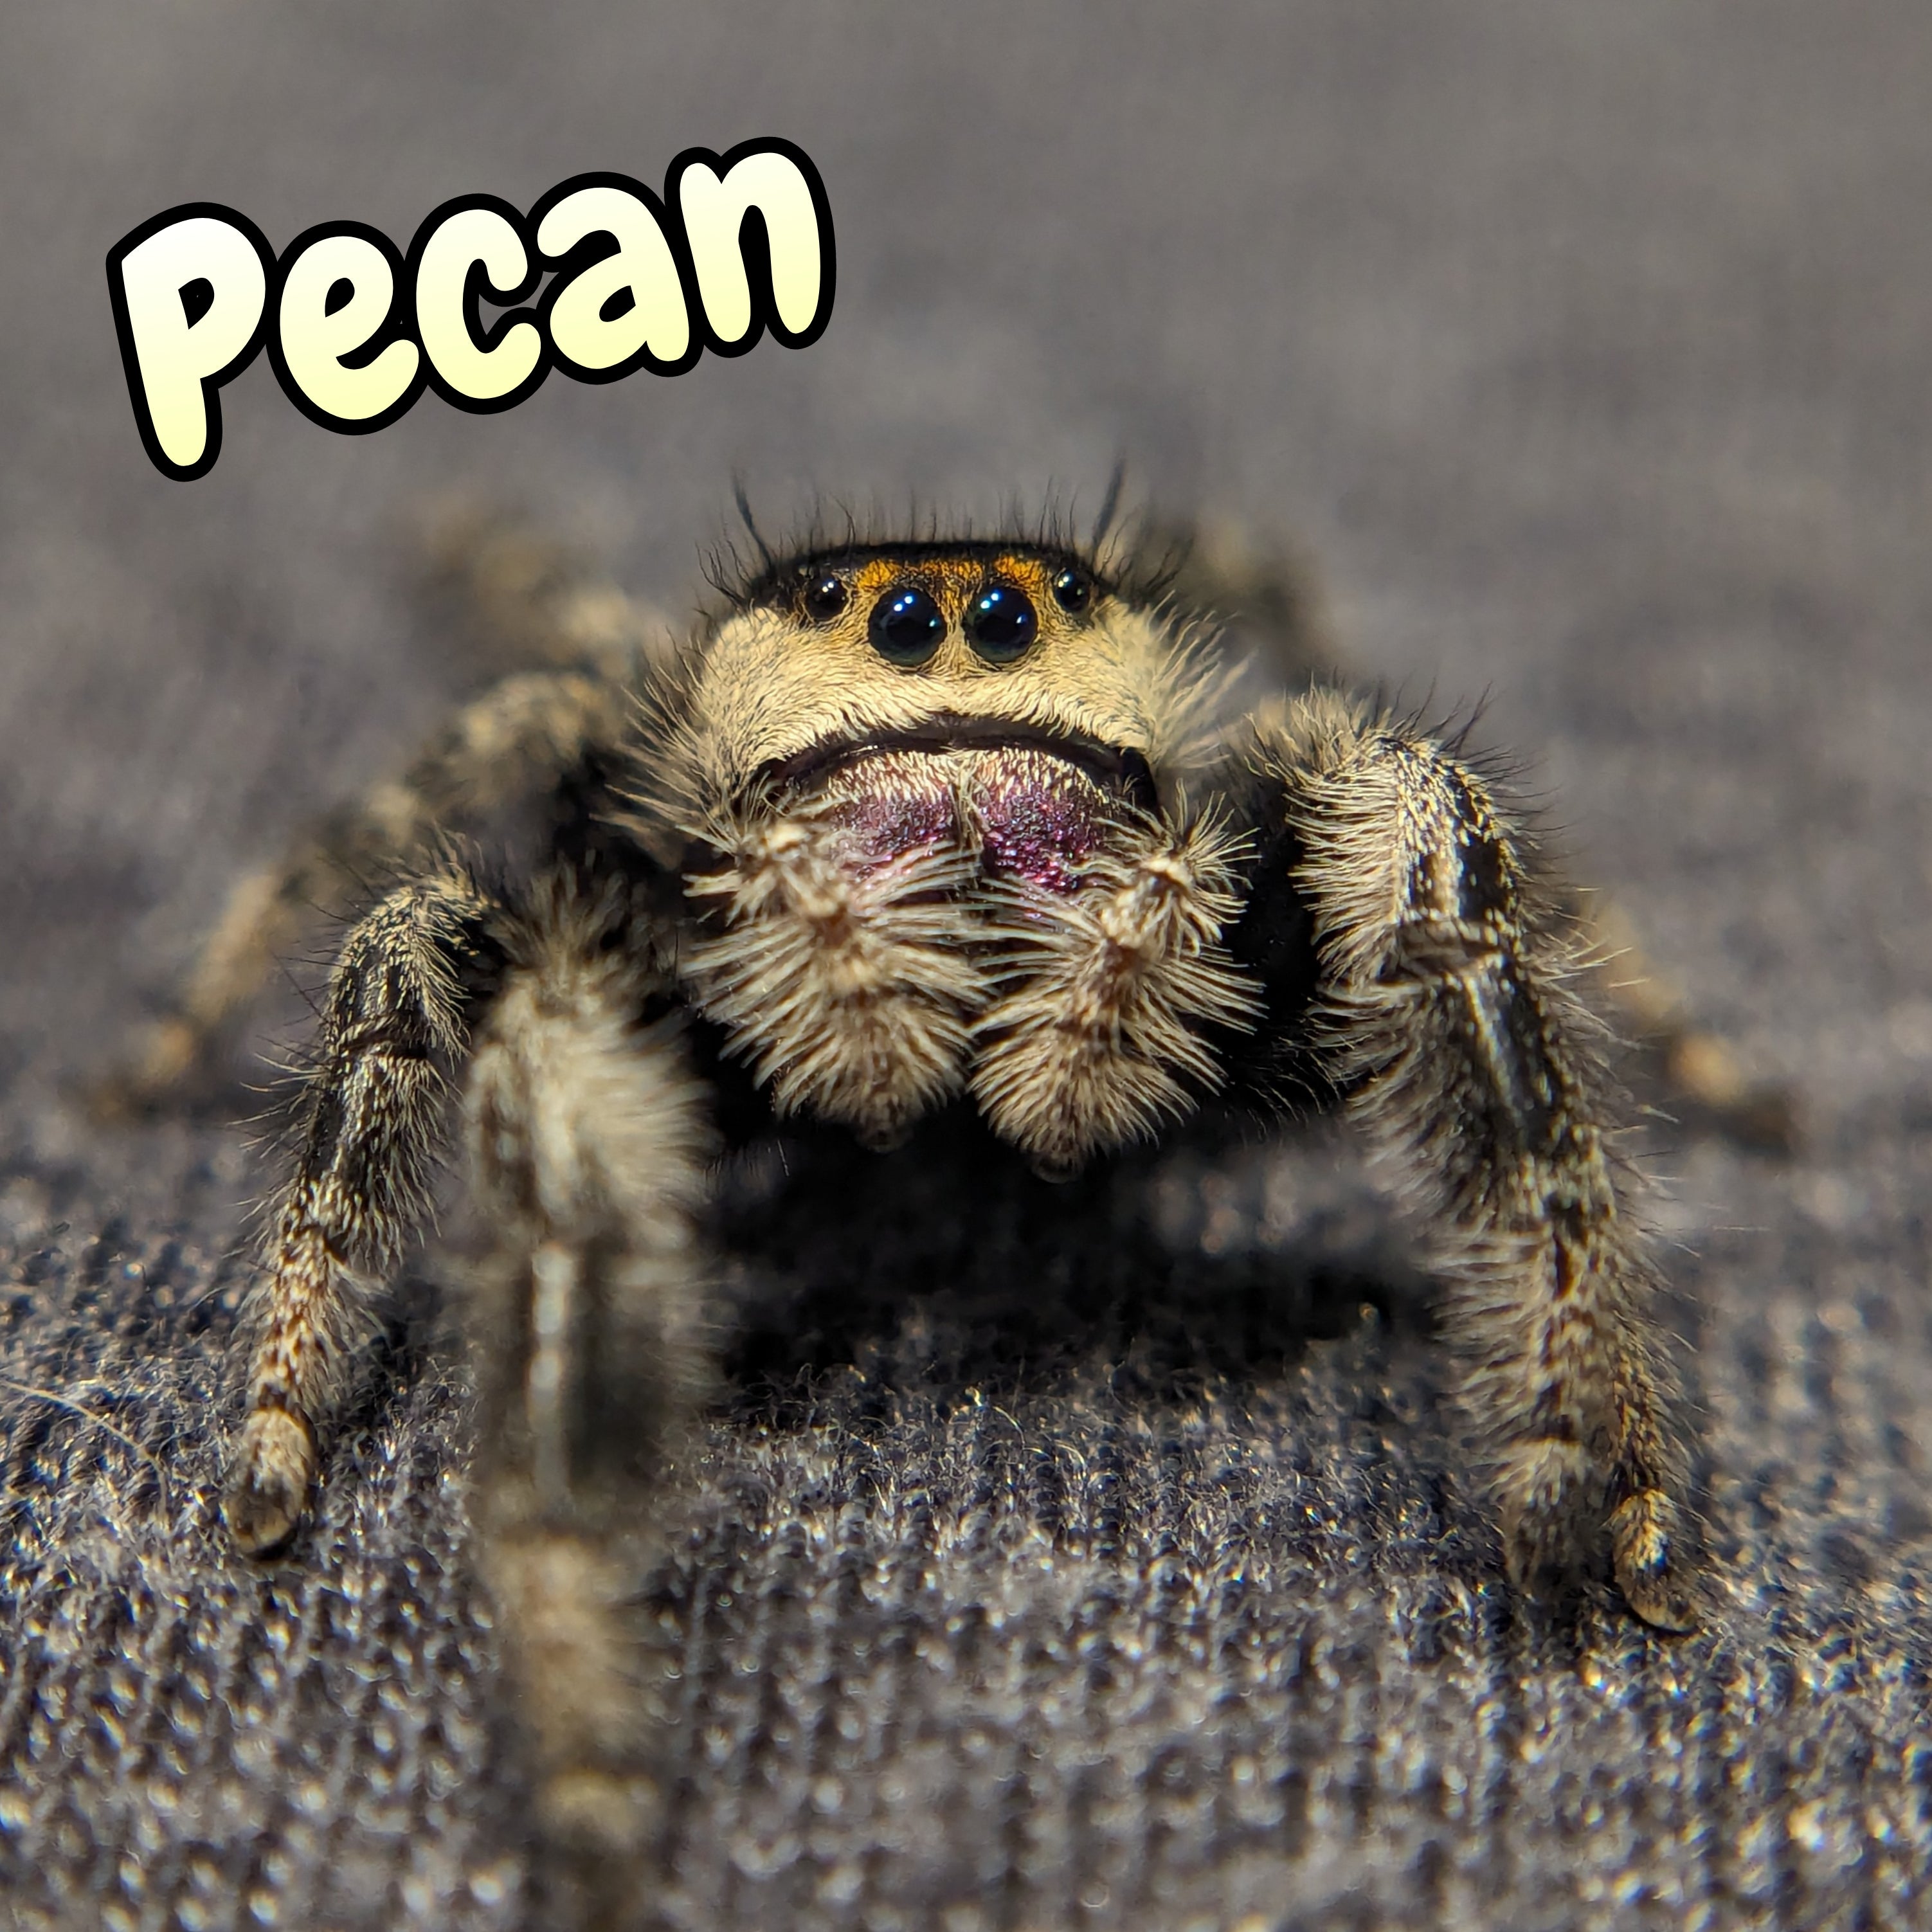 Regal Jumping Spider "Pecan"